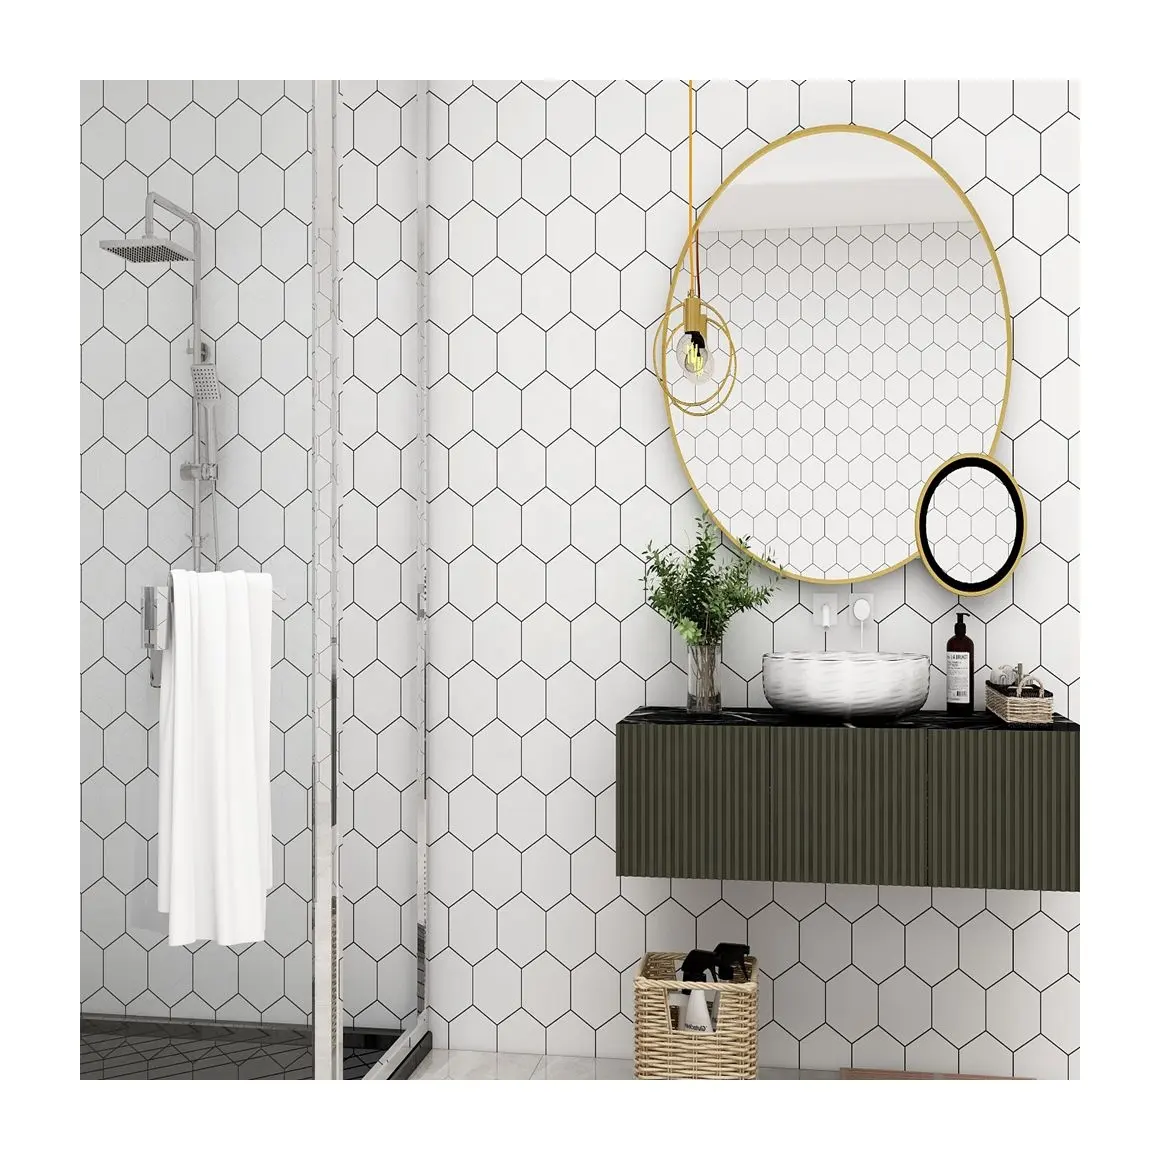 Removable tile wallpaper bathroom wallpaper kitchen wall sticker wallpaper